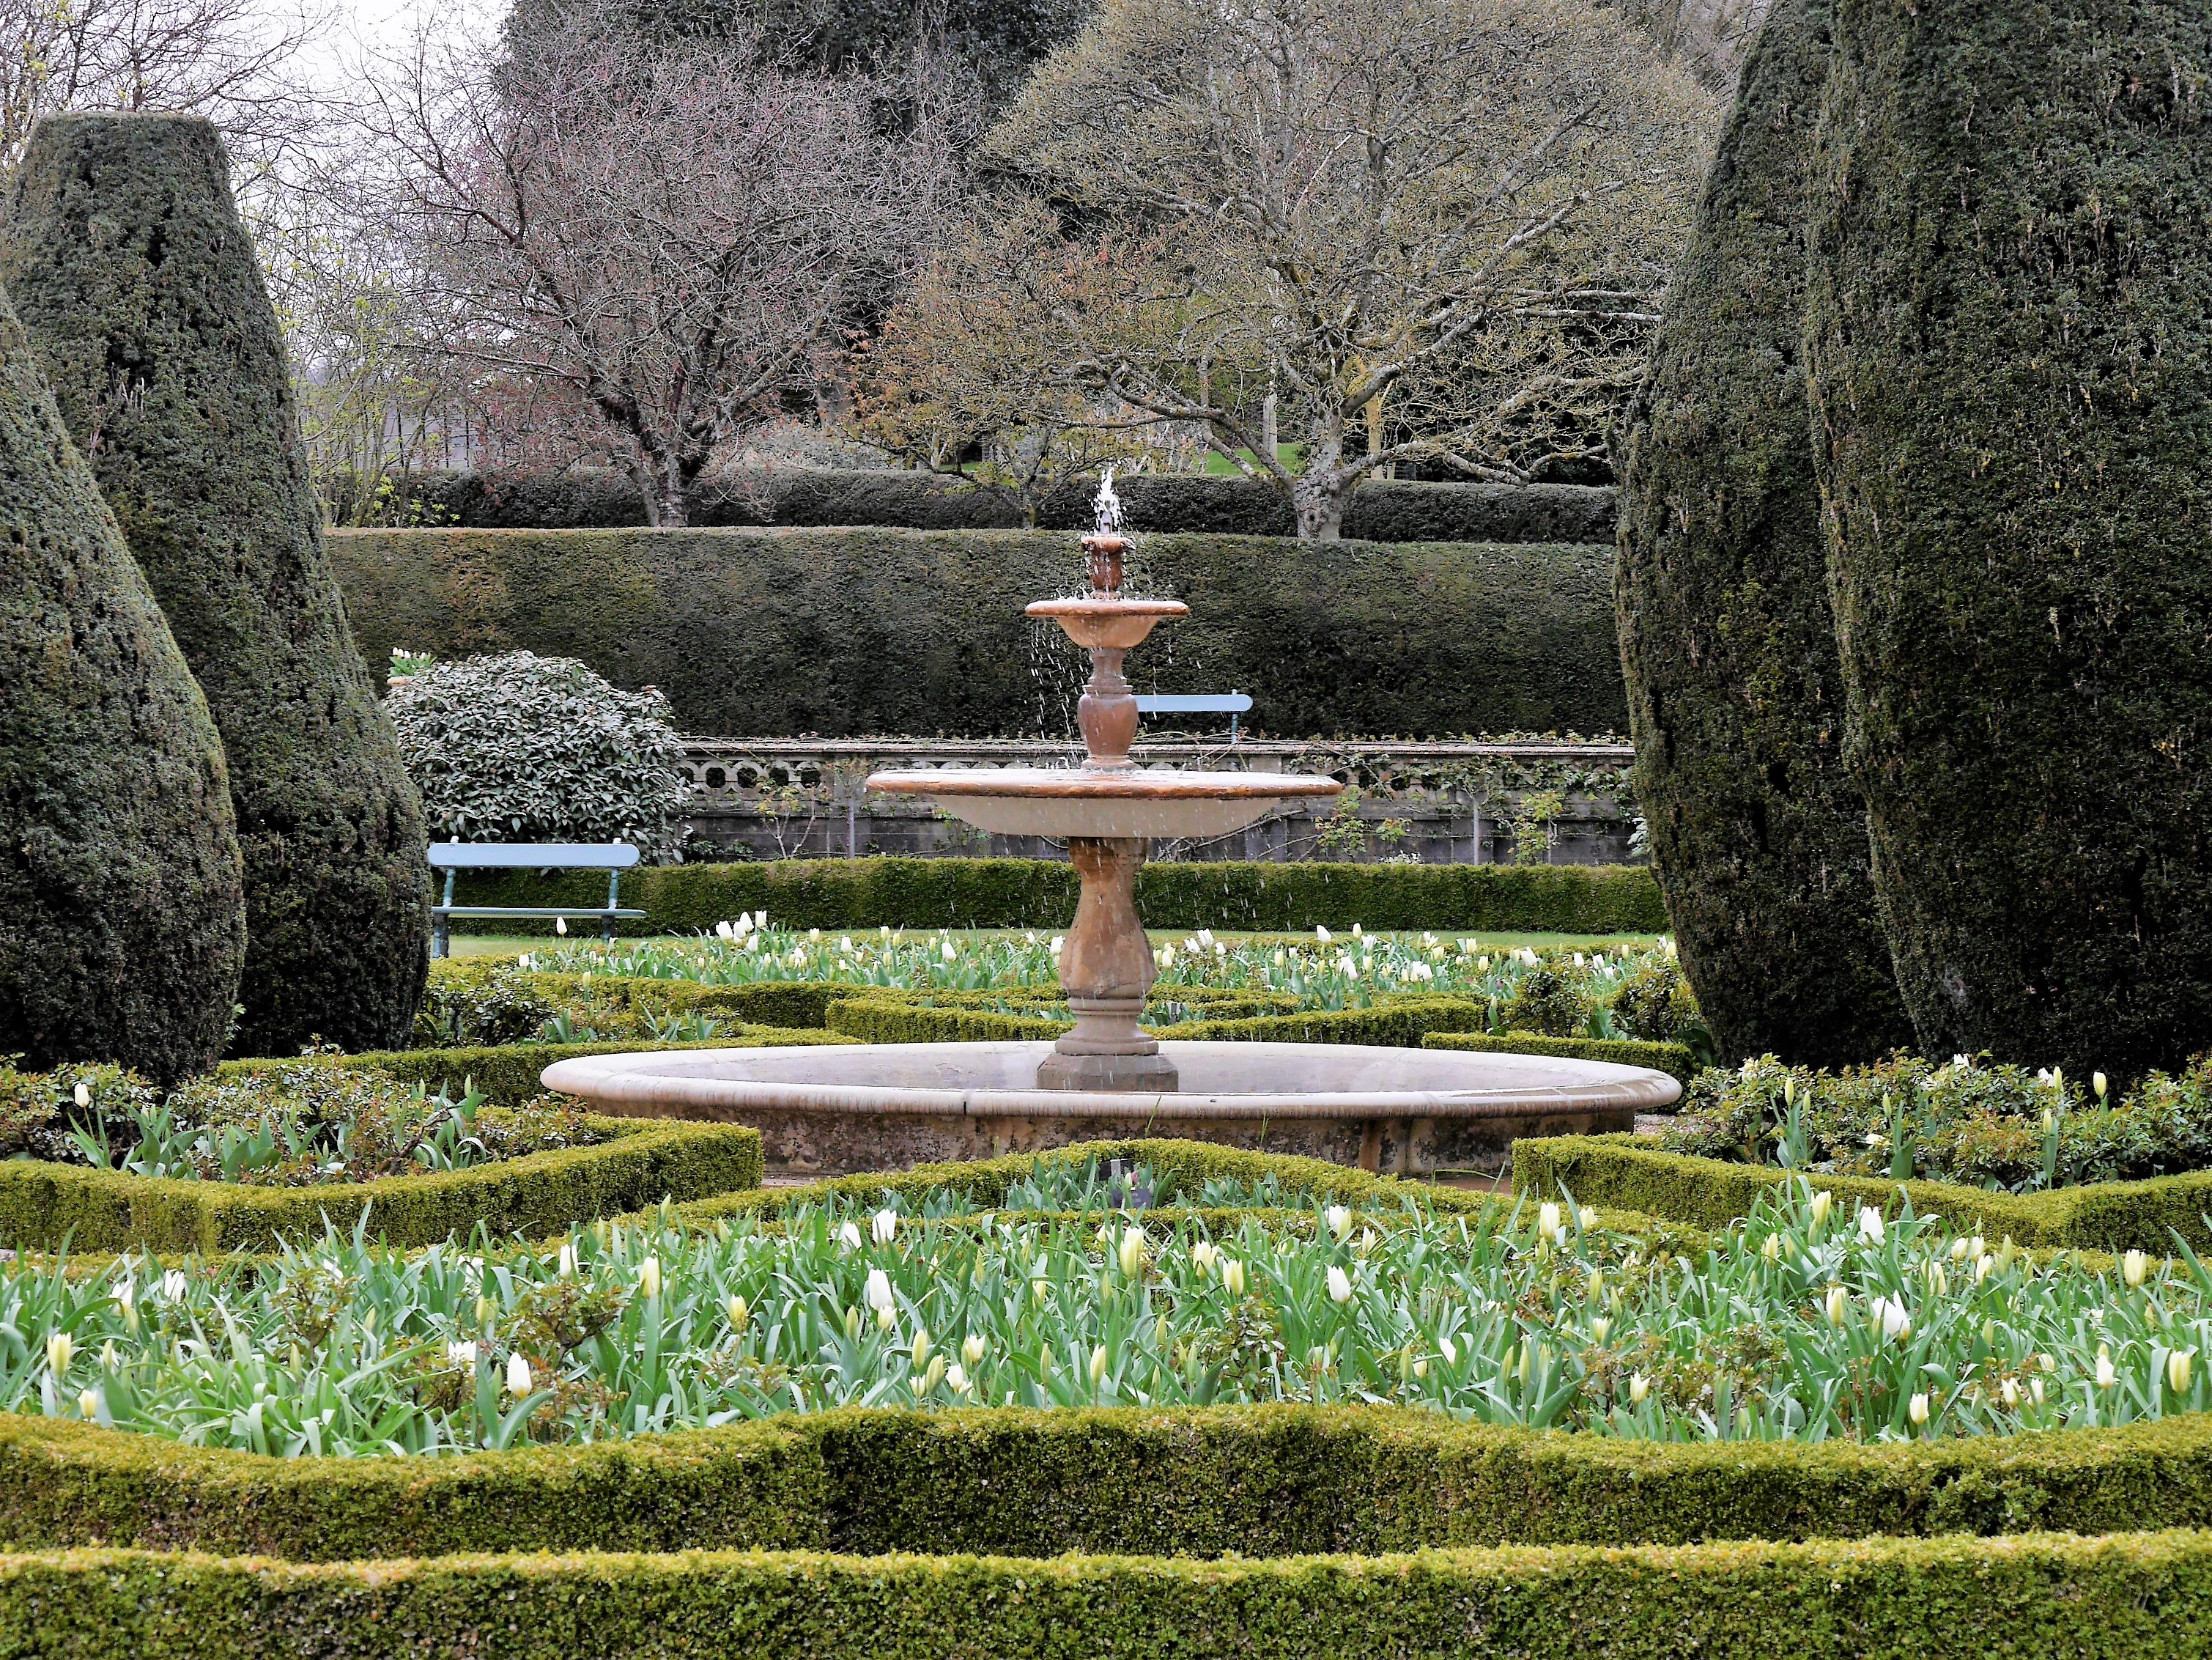  Bowood Fountain